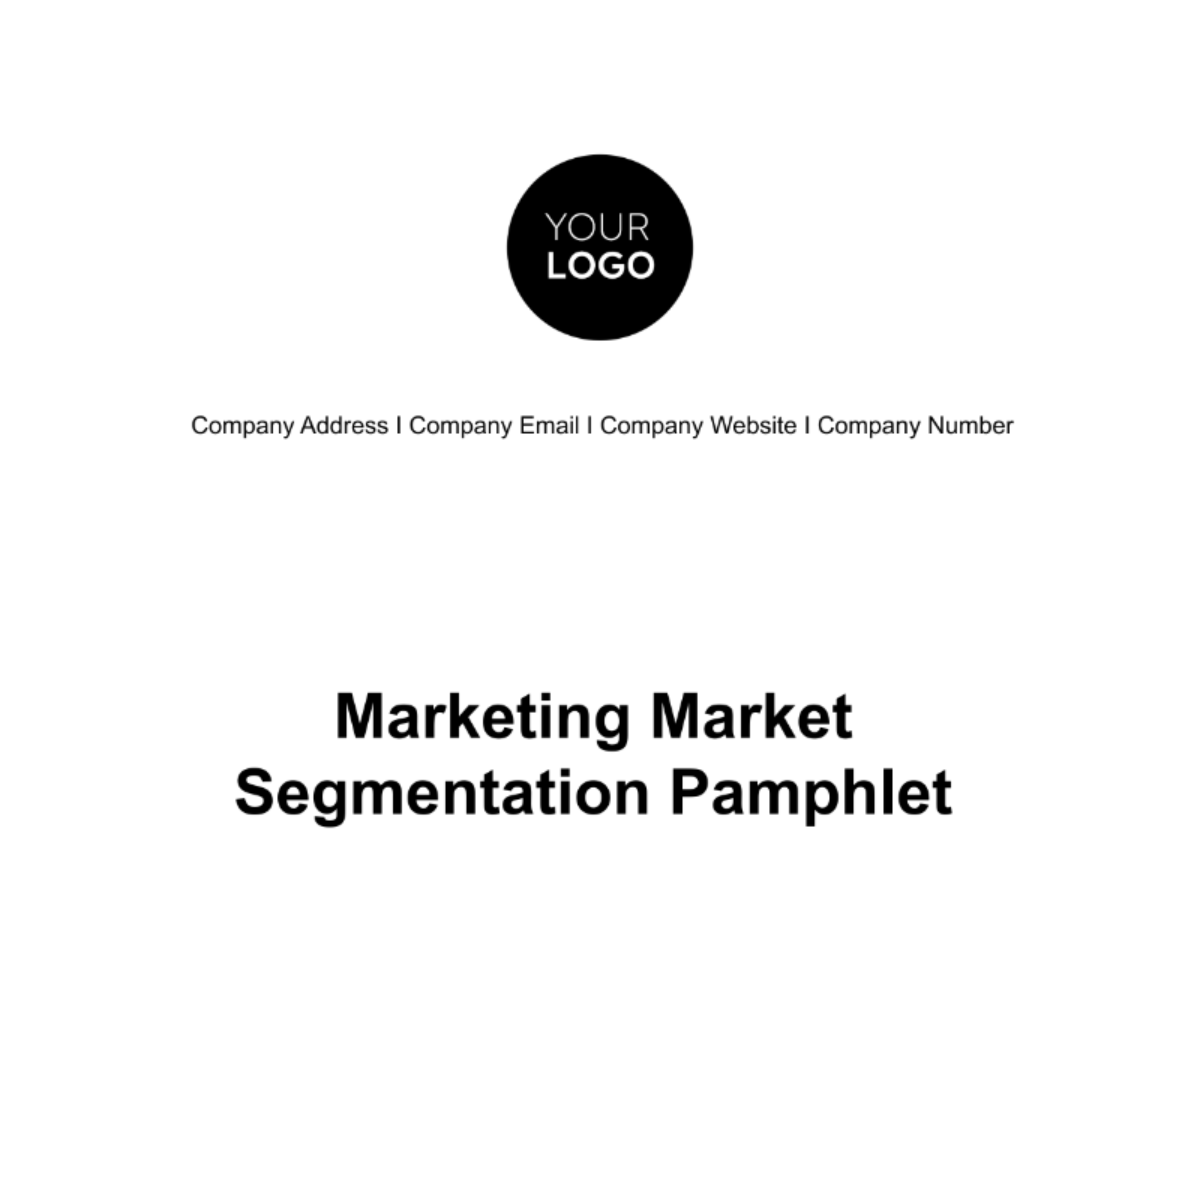 Marketing Market Segmentation Pamphlet Template